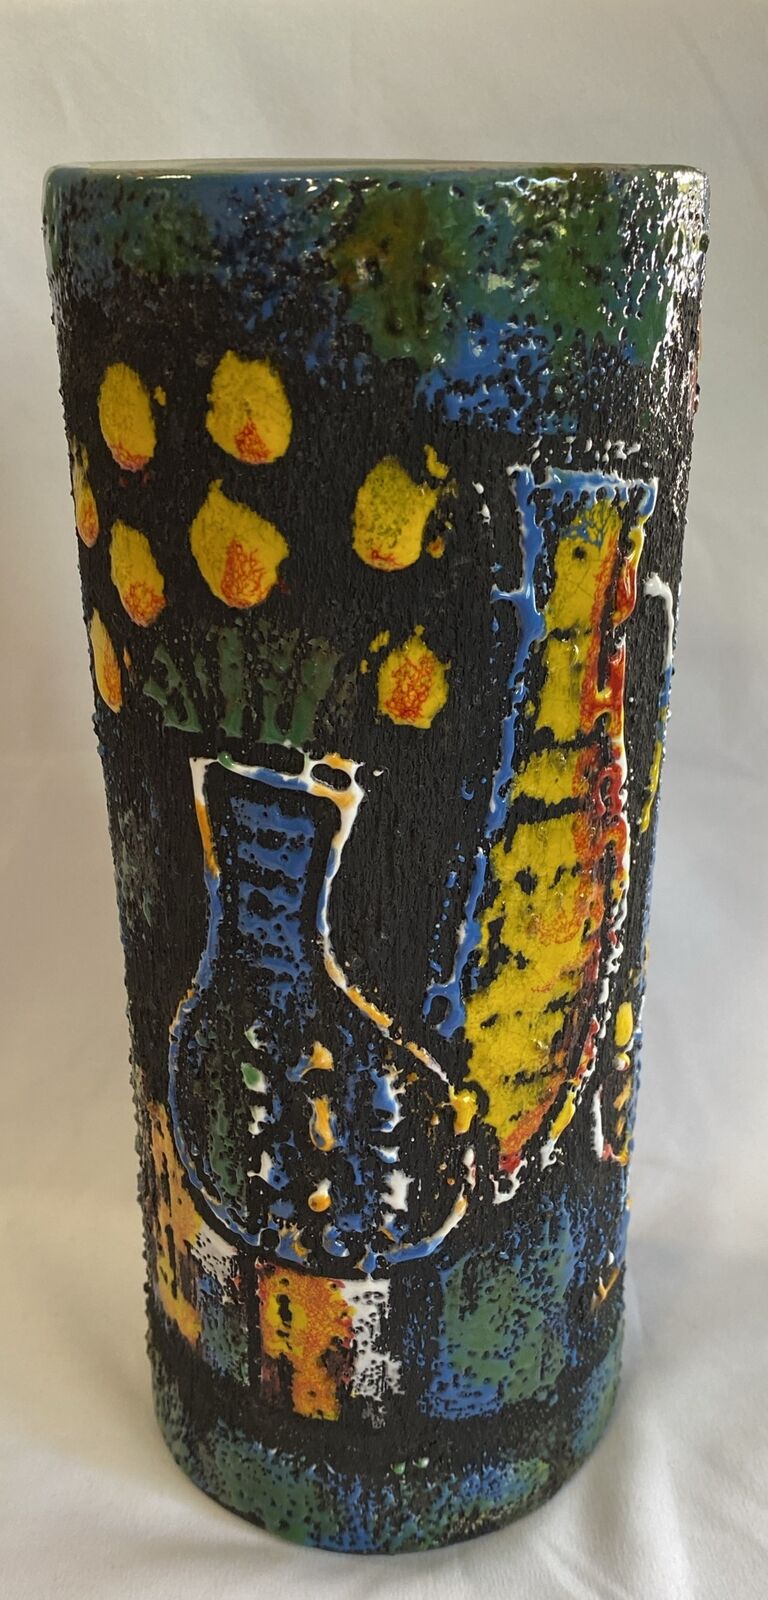 Dramatic Alvino Bagni for Raymor Cylinder Vase R-1989 Italy Textured Vibrant